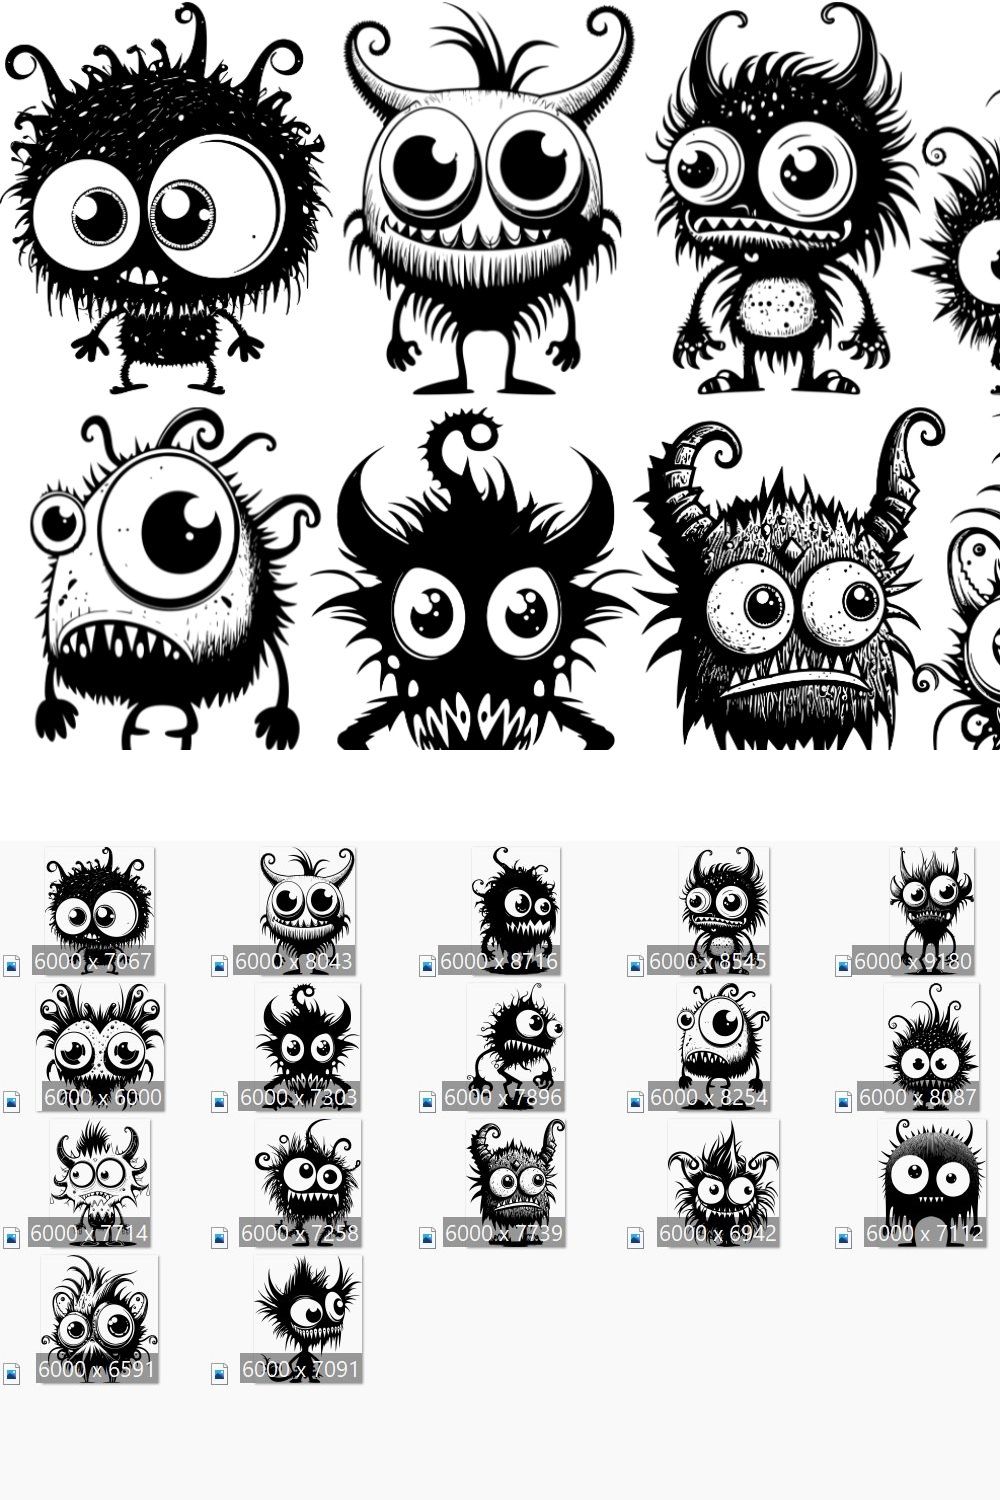 Cute Monsters SVG/PNG Bundle pinterest preview image.